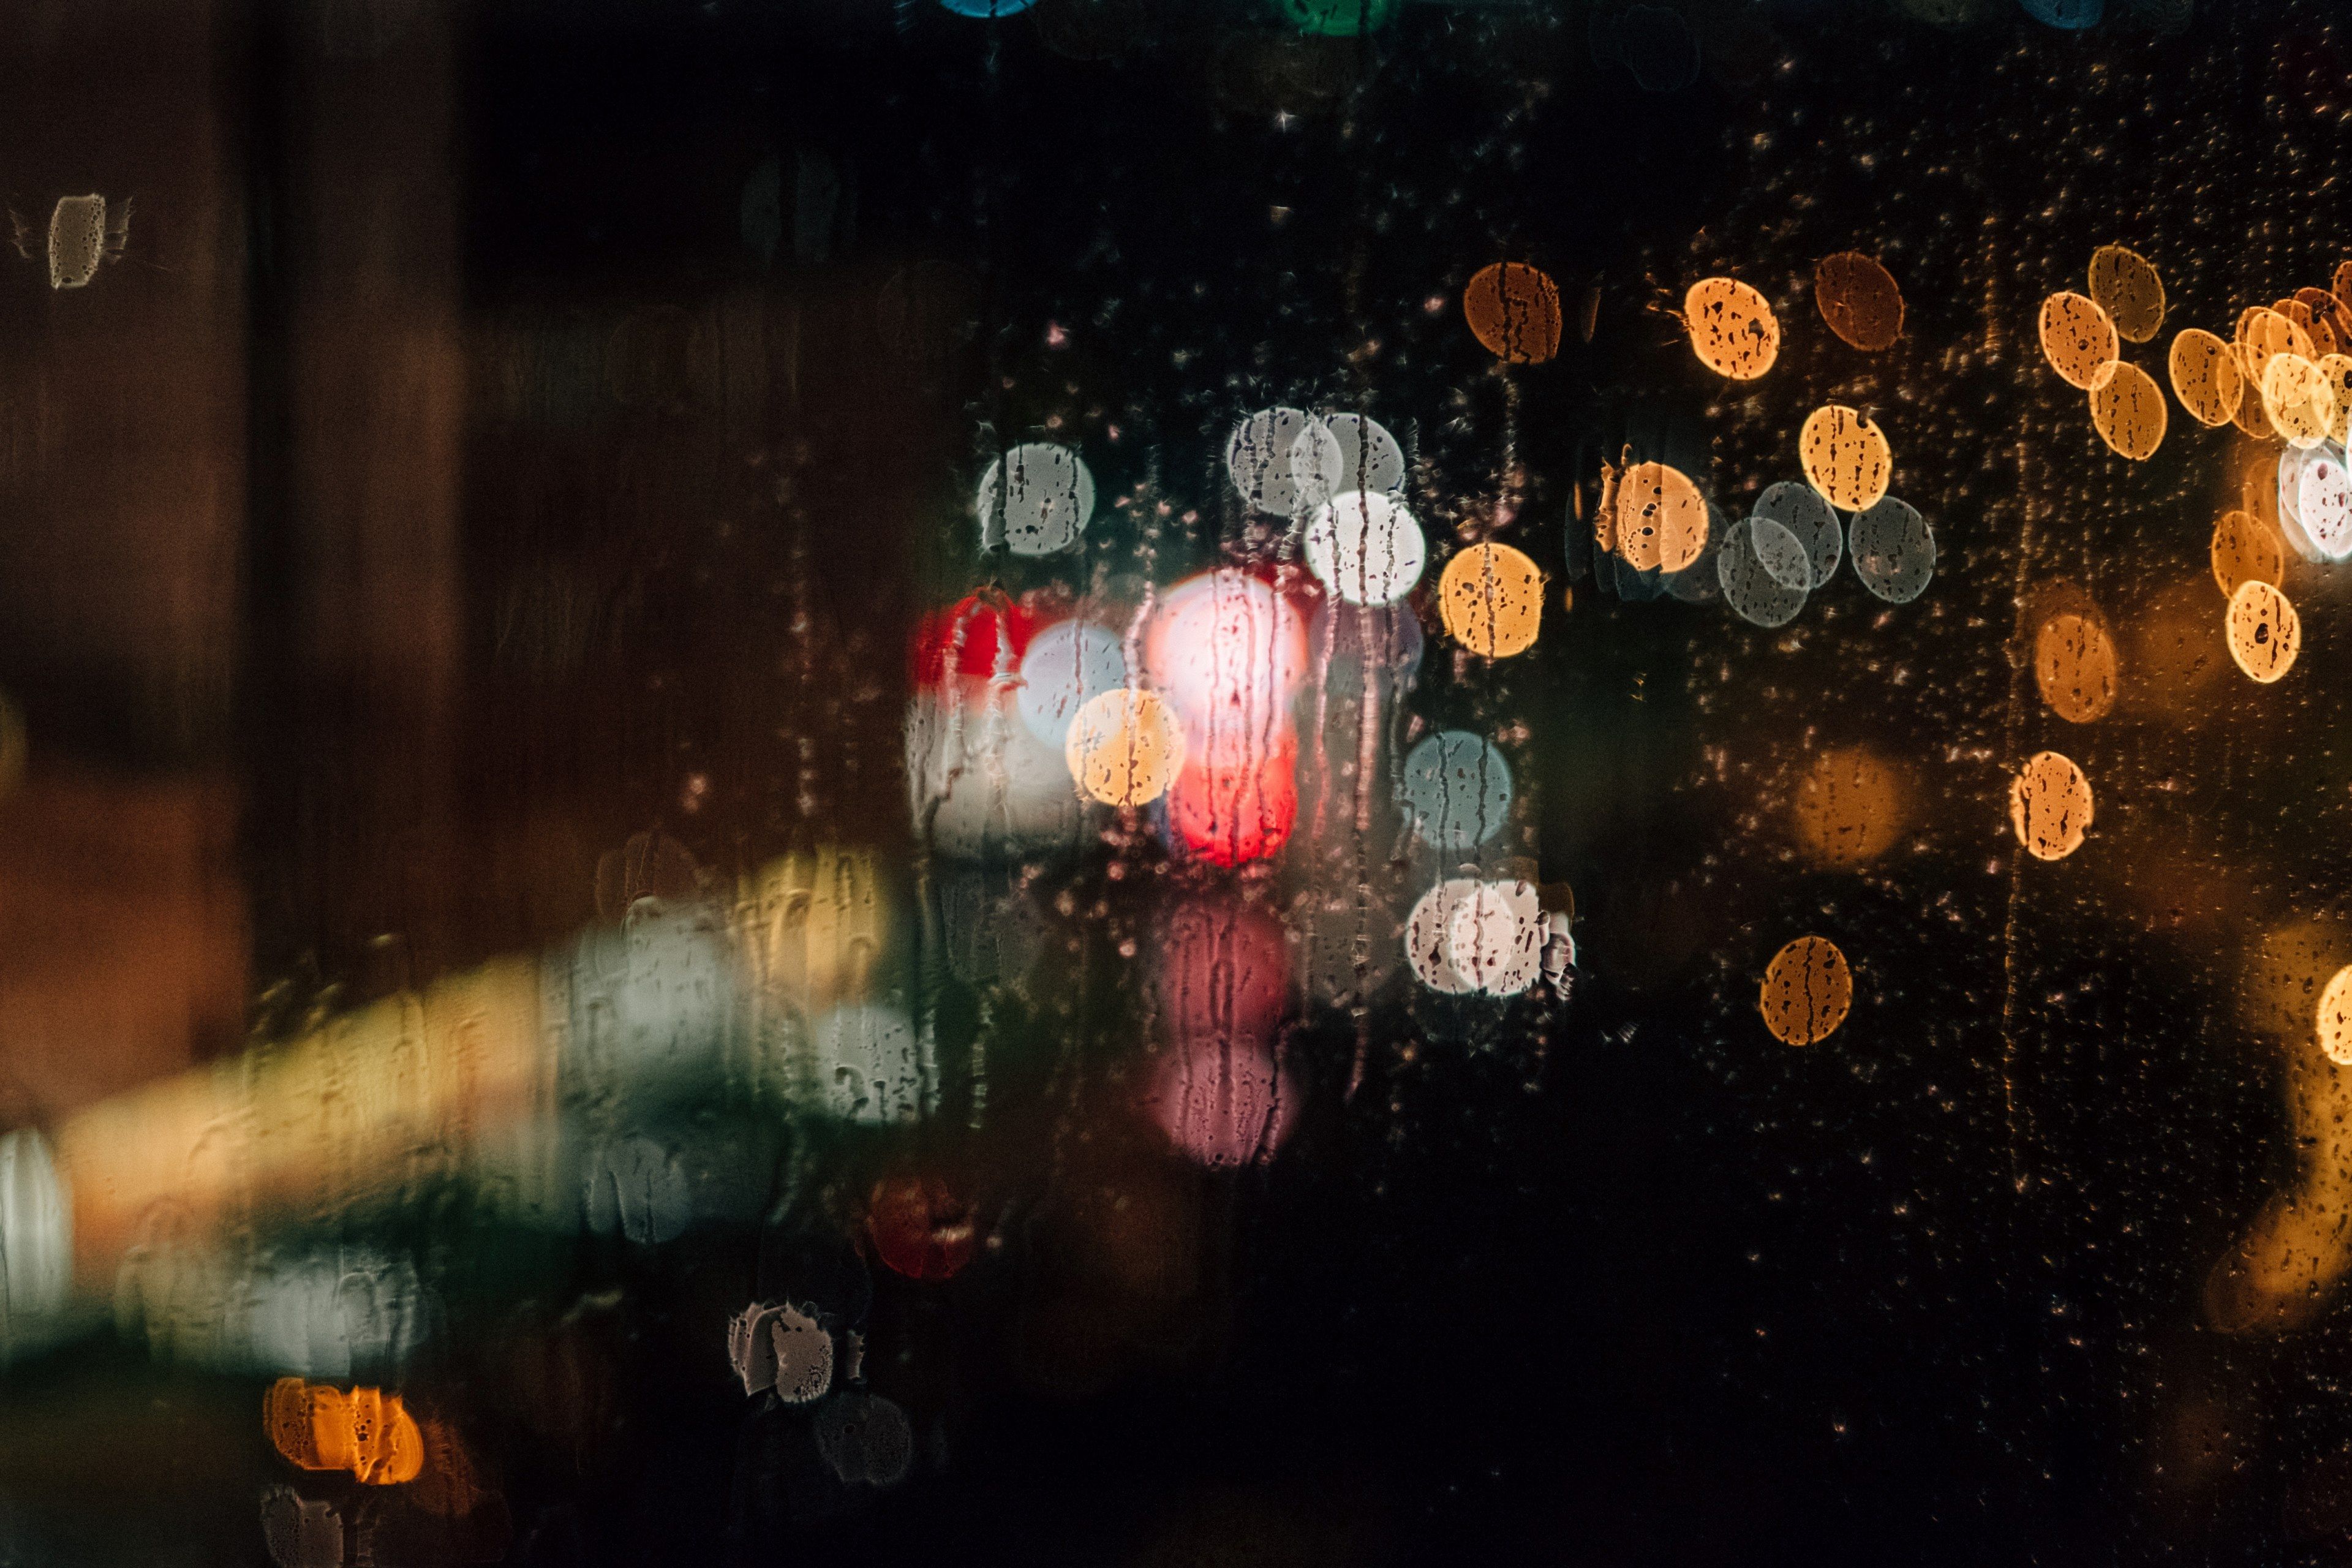 Wallpaper / a rain streaked window with a bokeh effect, lights behind a rainy window 4k wallpaper